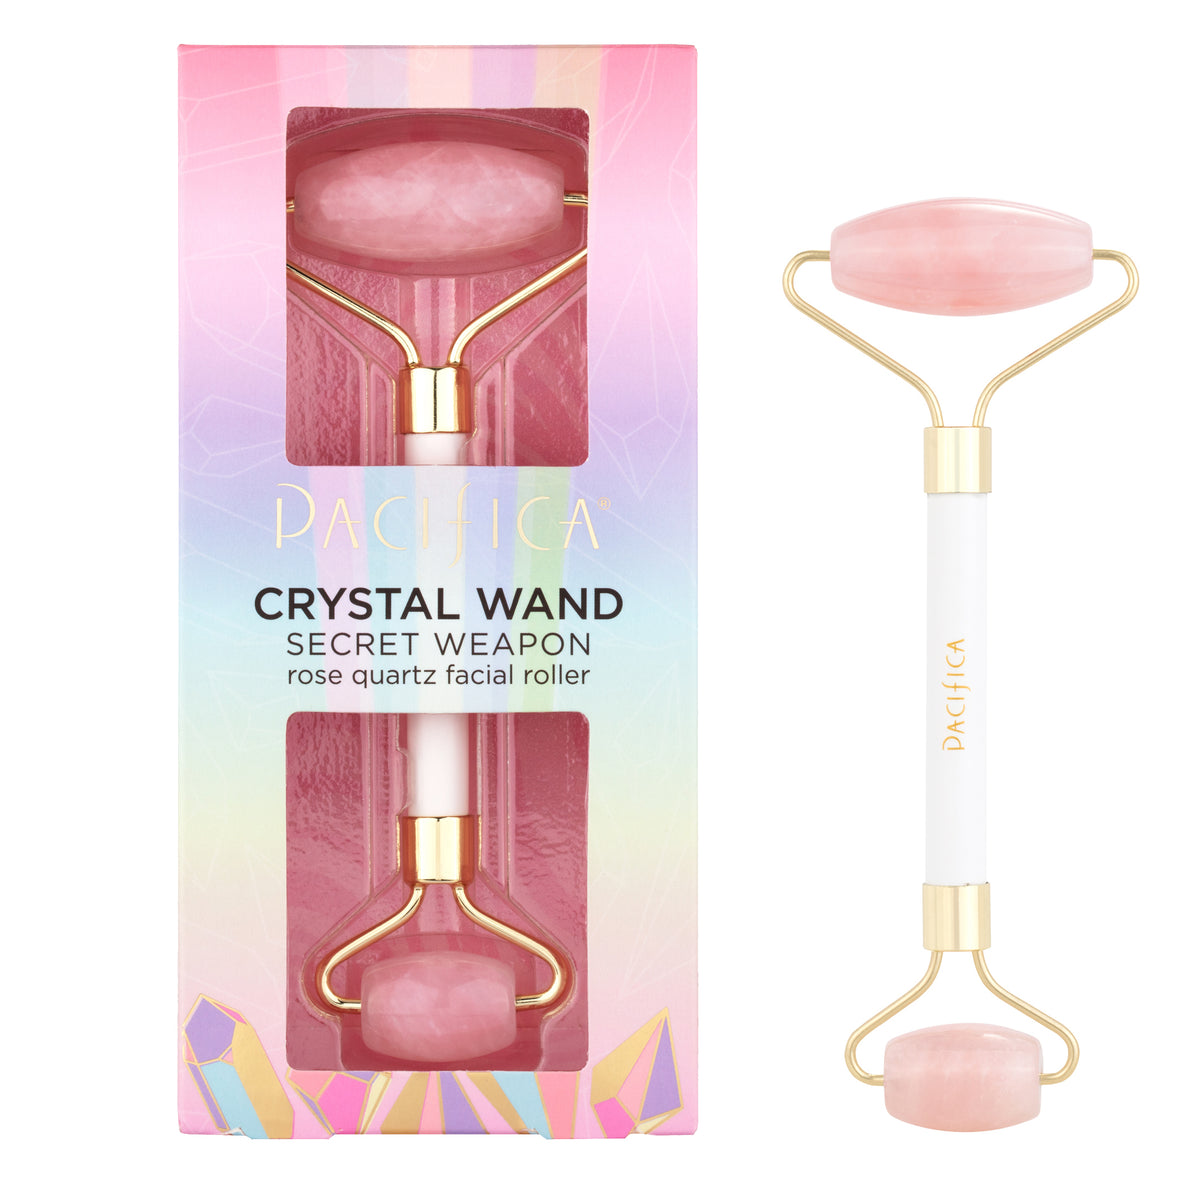 Crystal Wand Secret Weapon Rose Quartz Facial Roller - Skin Care - Pacifica Beauty